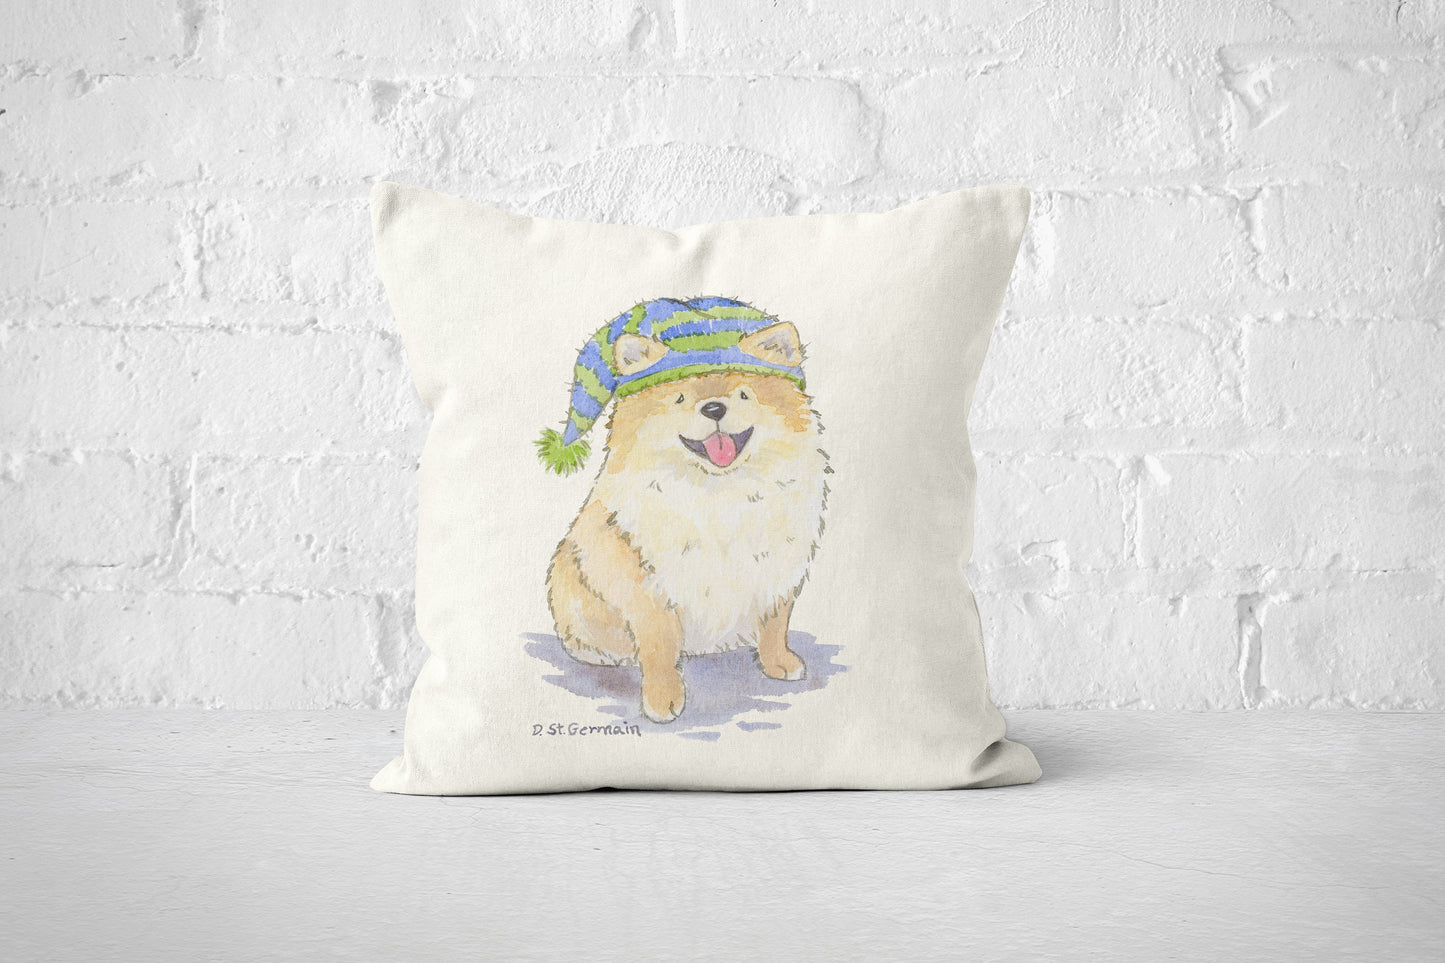 Pomeranian Holiday Pillow Cover, Christmas Pillow, Pomeranian Gift, Pomeranian Throw Pillow Cover, Holiday Dog Decor, Dog Lover Gift